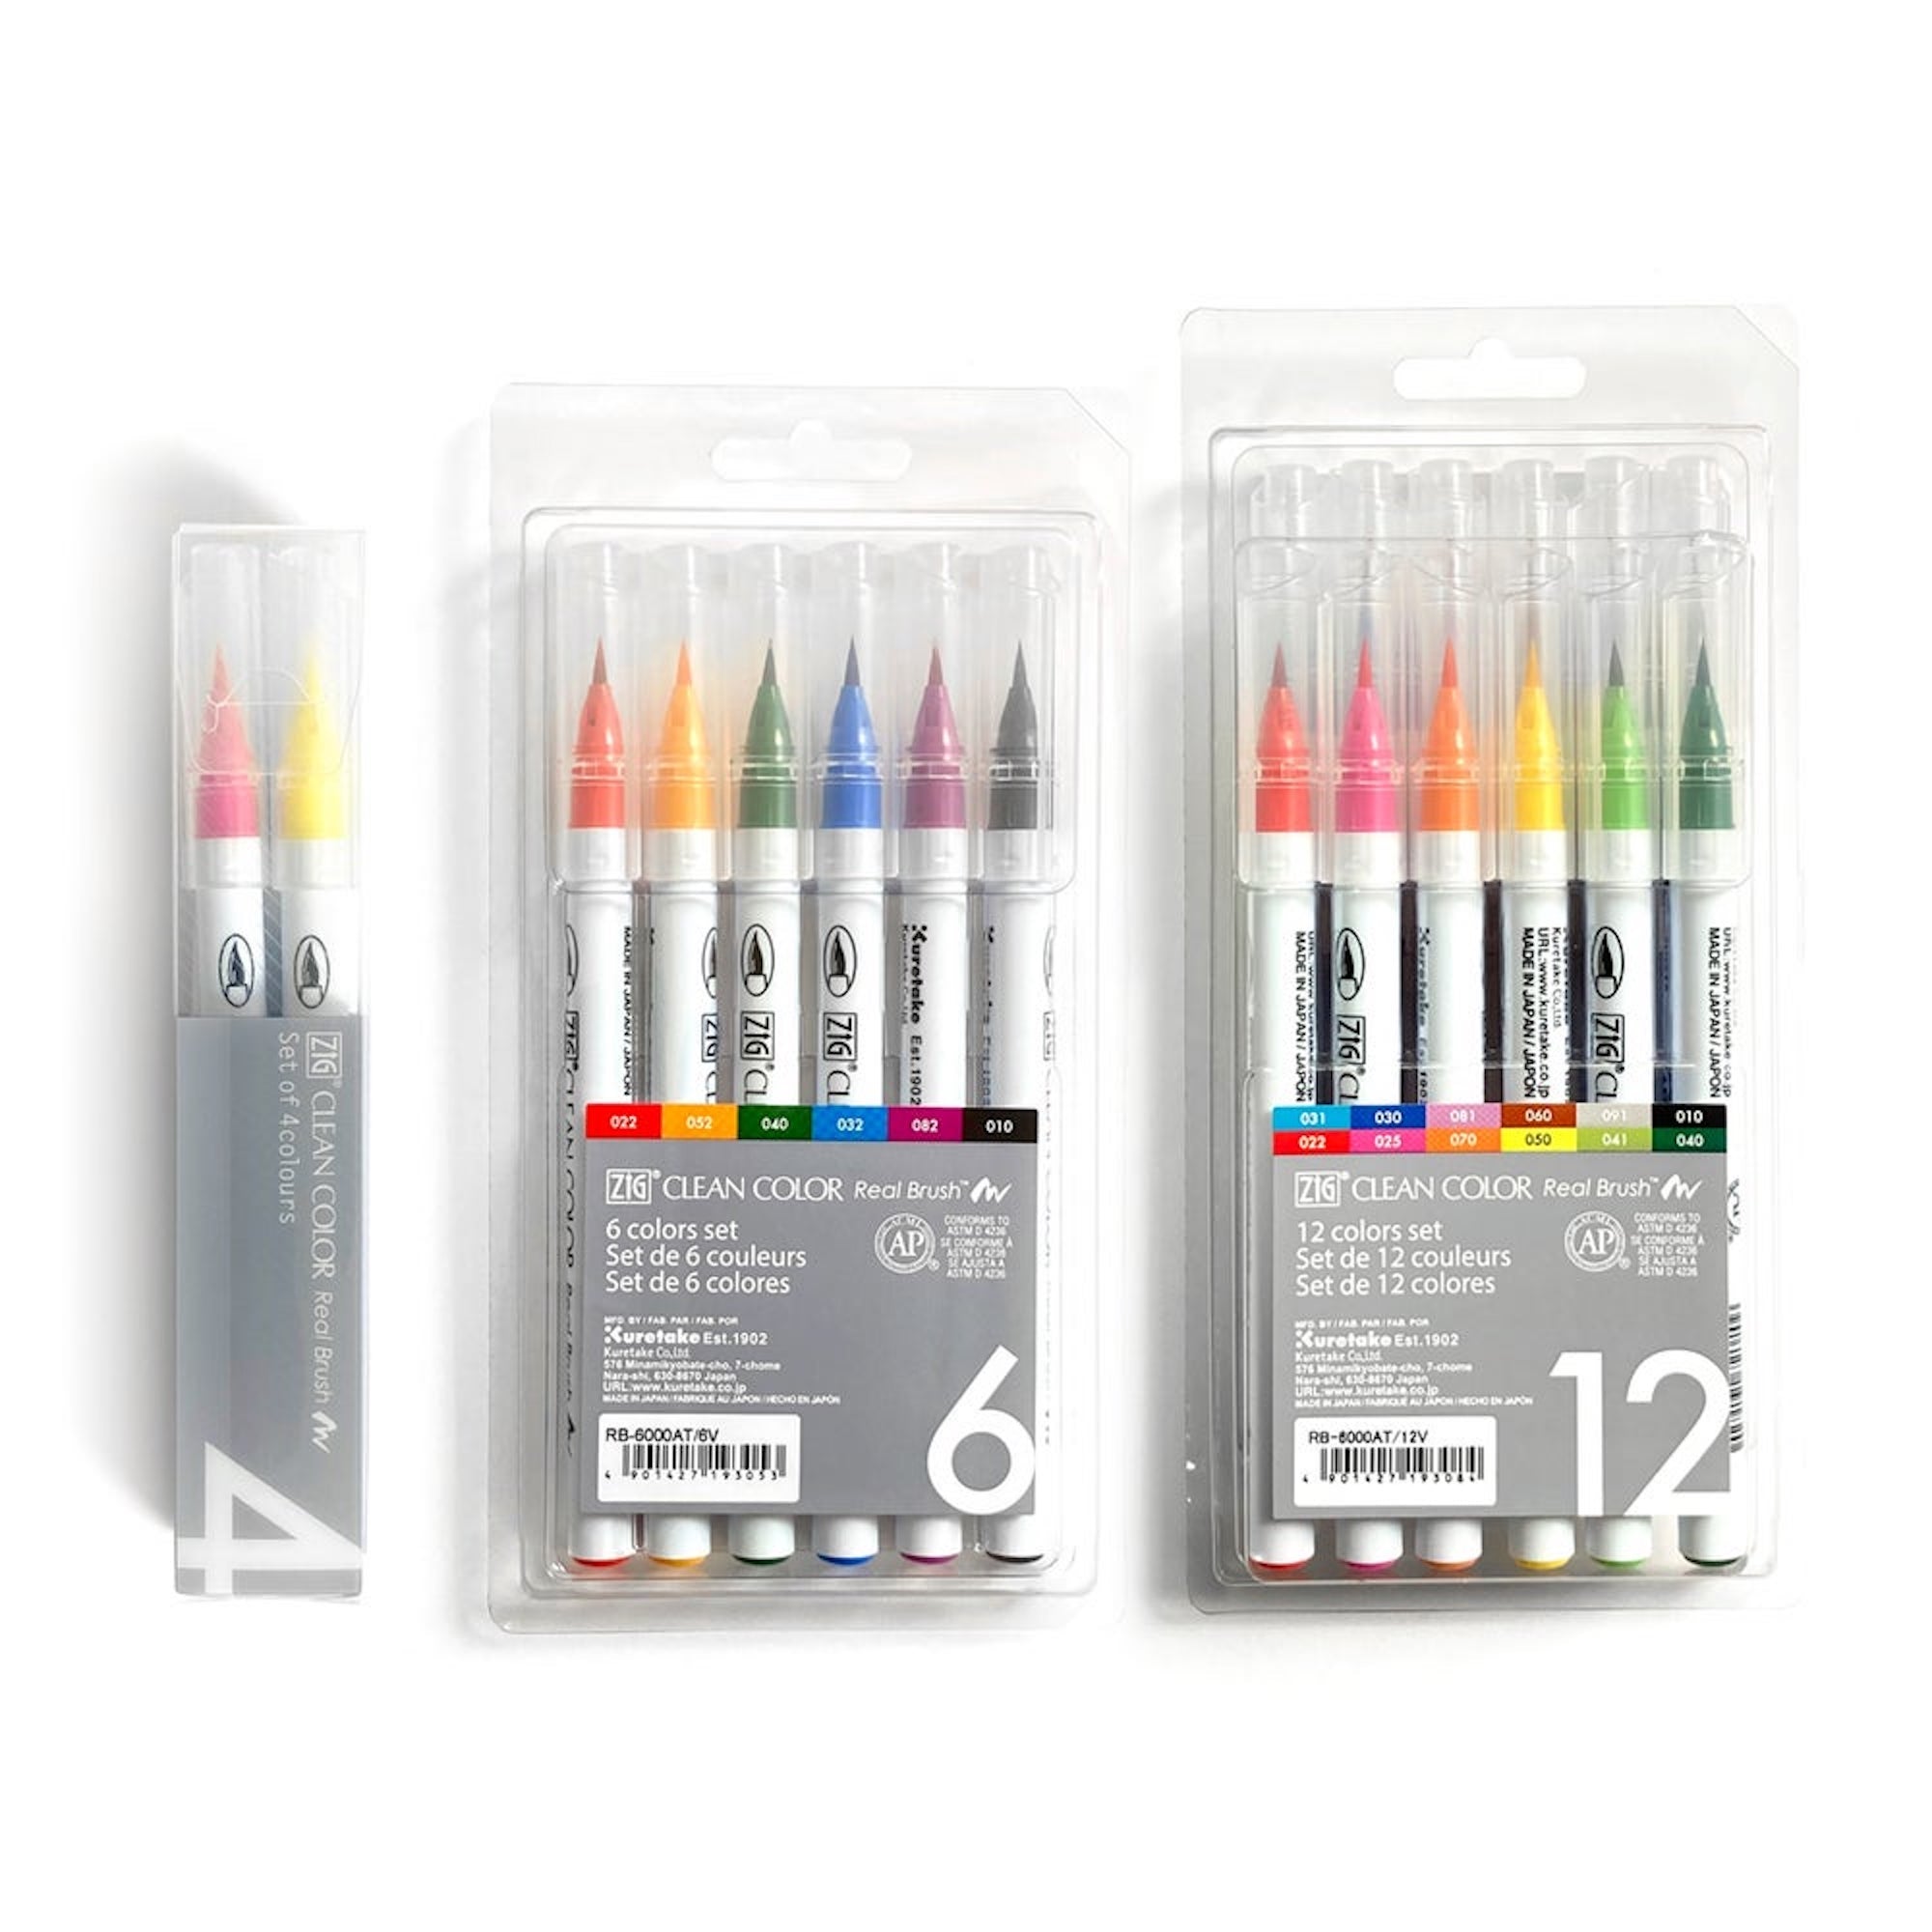 Kuretake Zig Clean Color Real Brush Set (4 / 6 / 12 Colours)